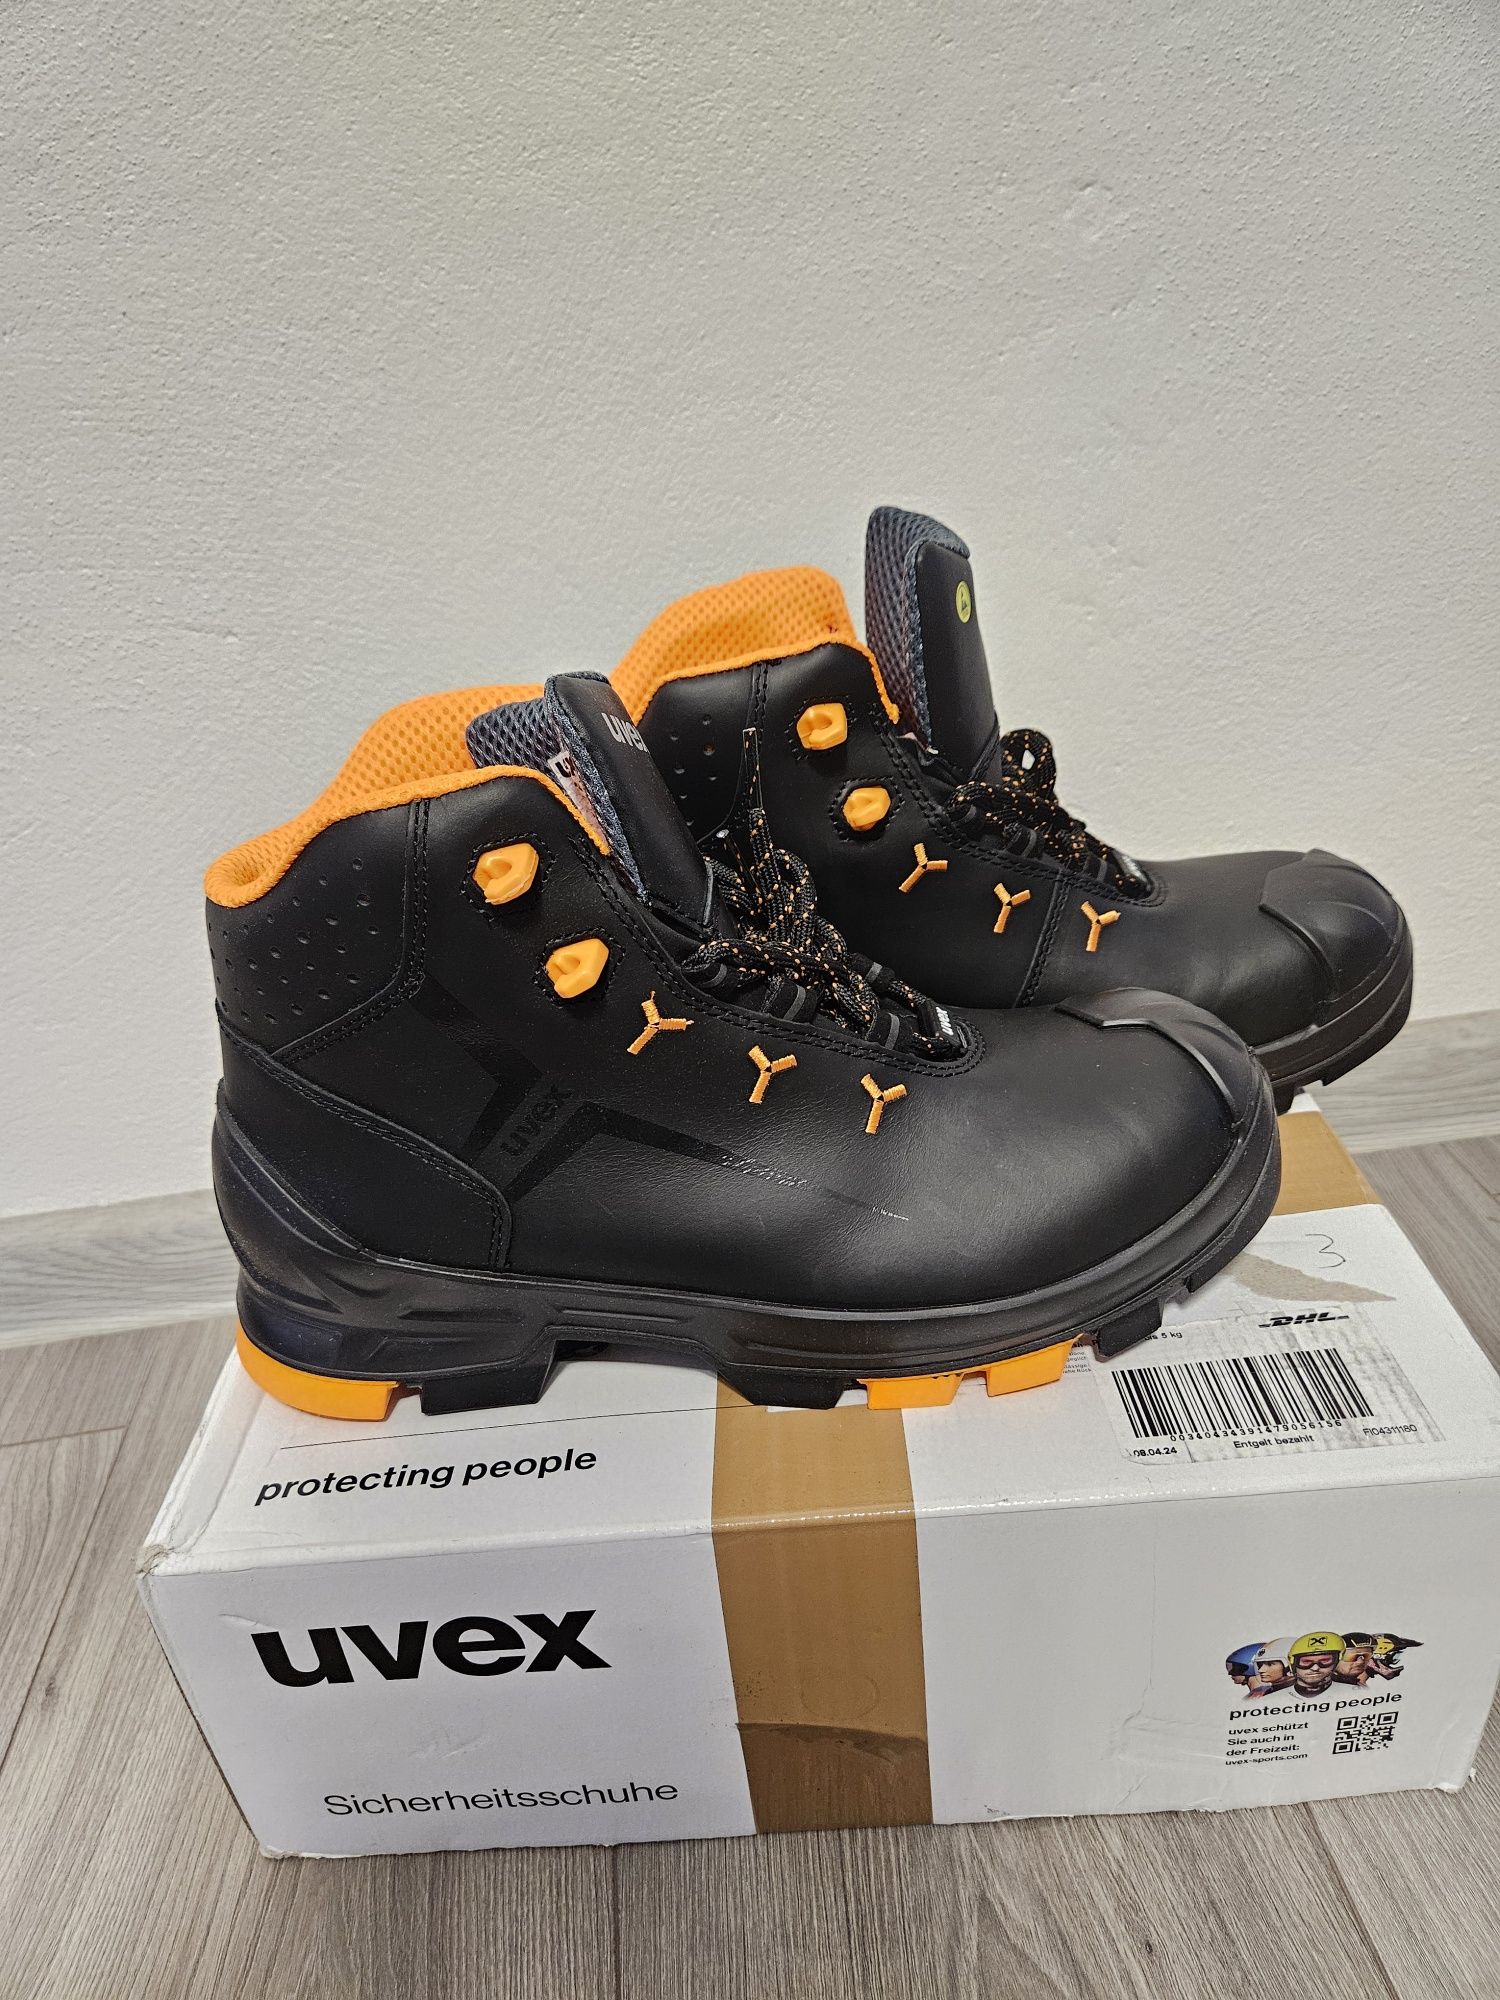 Pantofi (Ghete )de protectie uvex 2 65032 S3 SRC ESD